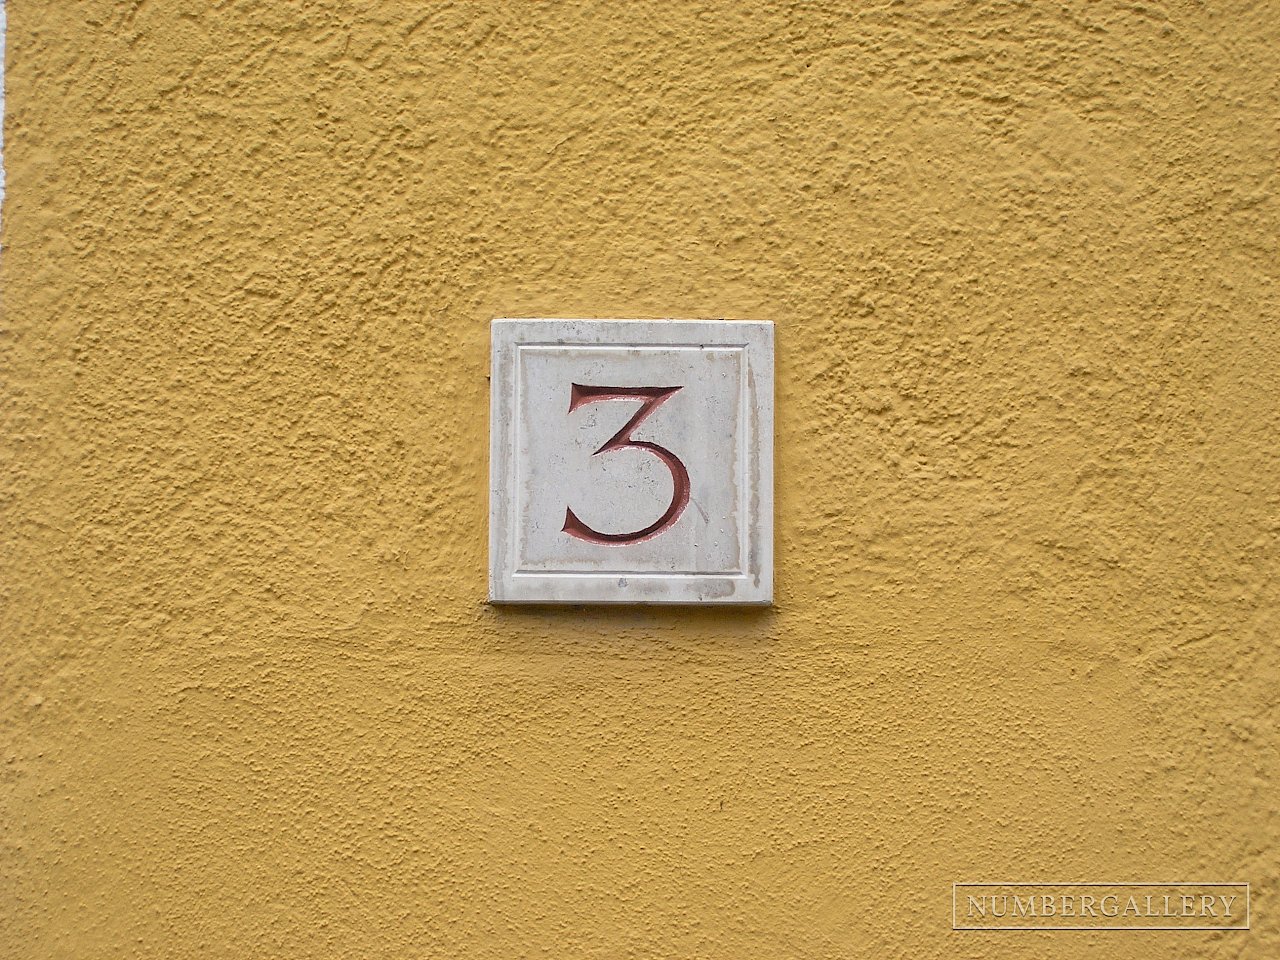 Hausnummer in Augsburg